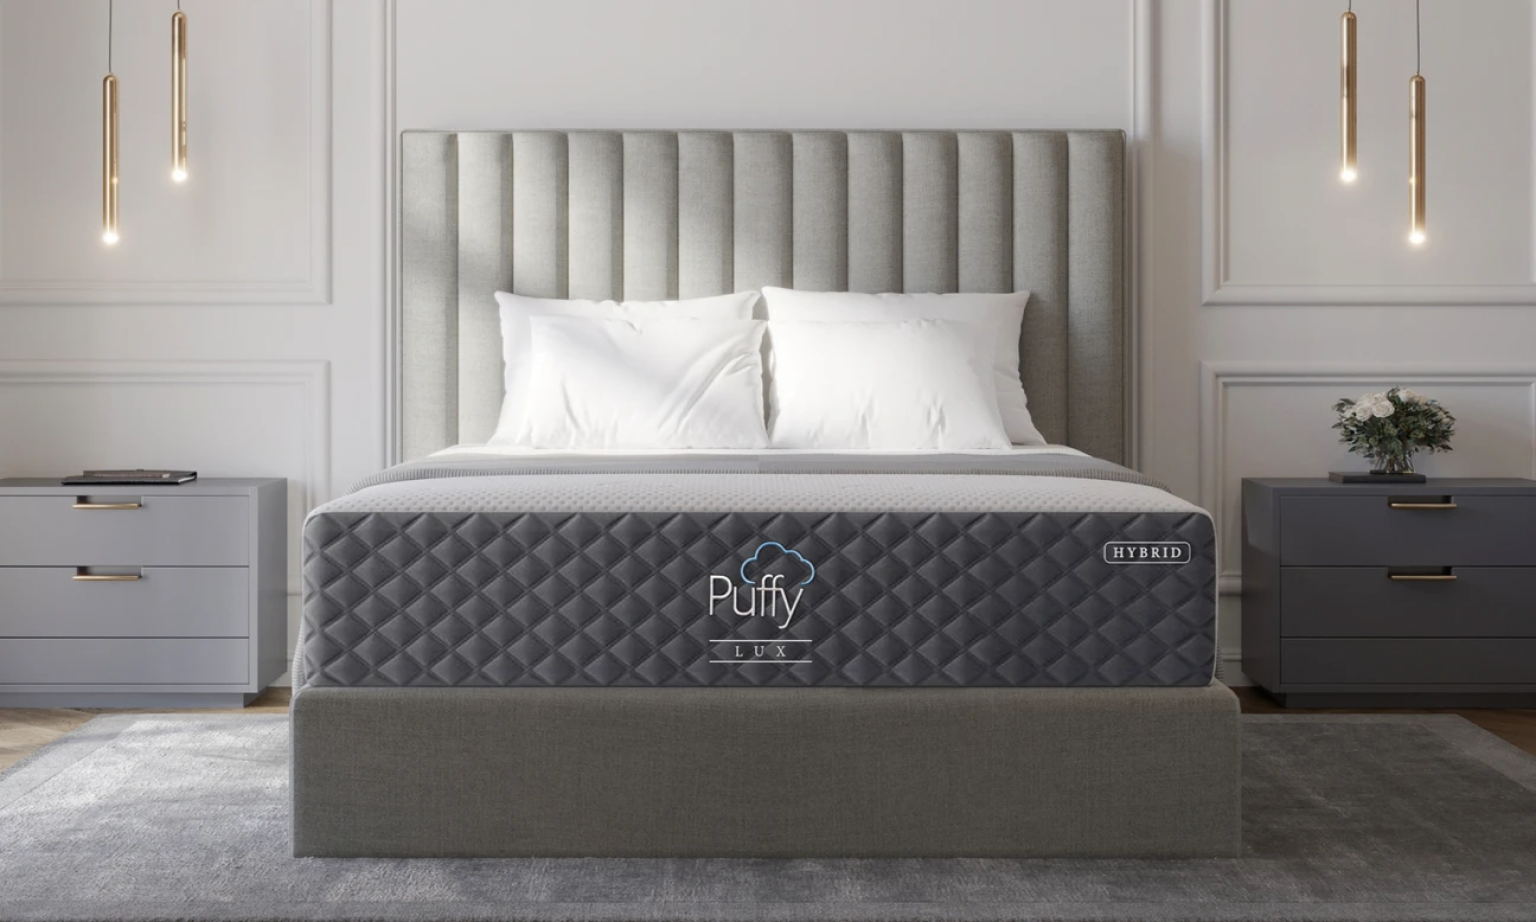 puffy lux mattress reviews reddit